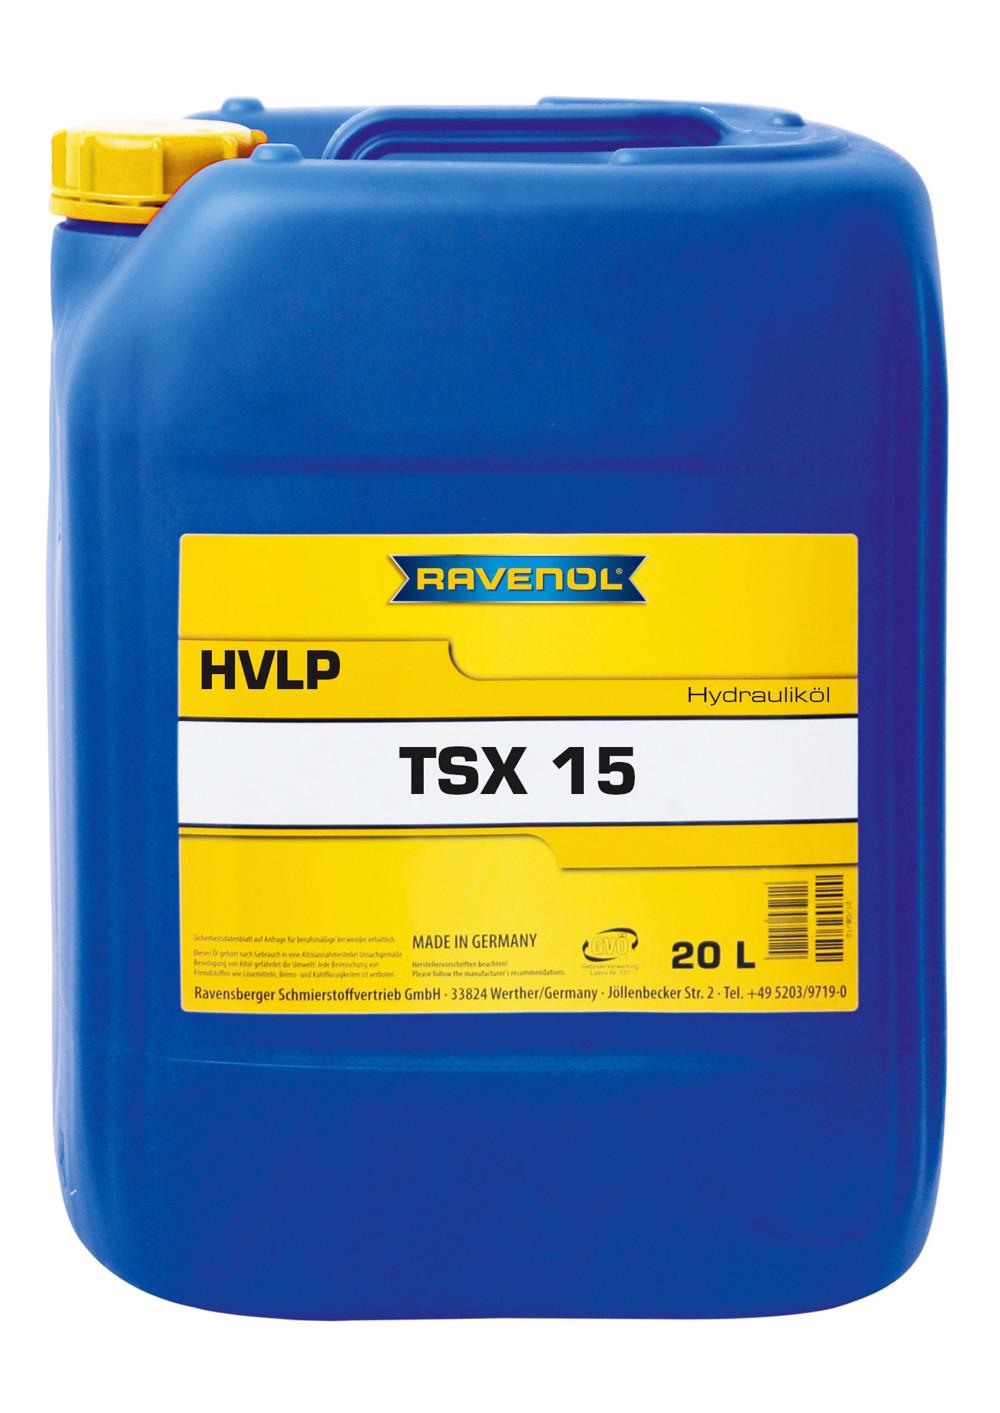 RAVENOL Hydraulikoel TSX 15 (HVLP)  20 L